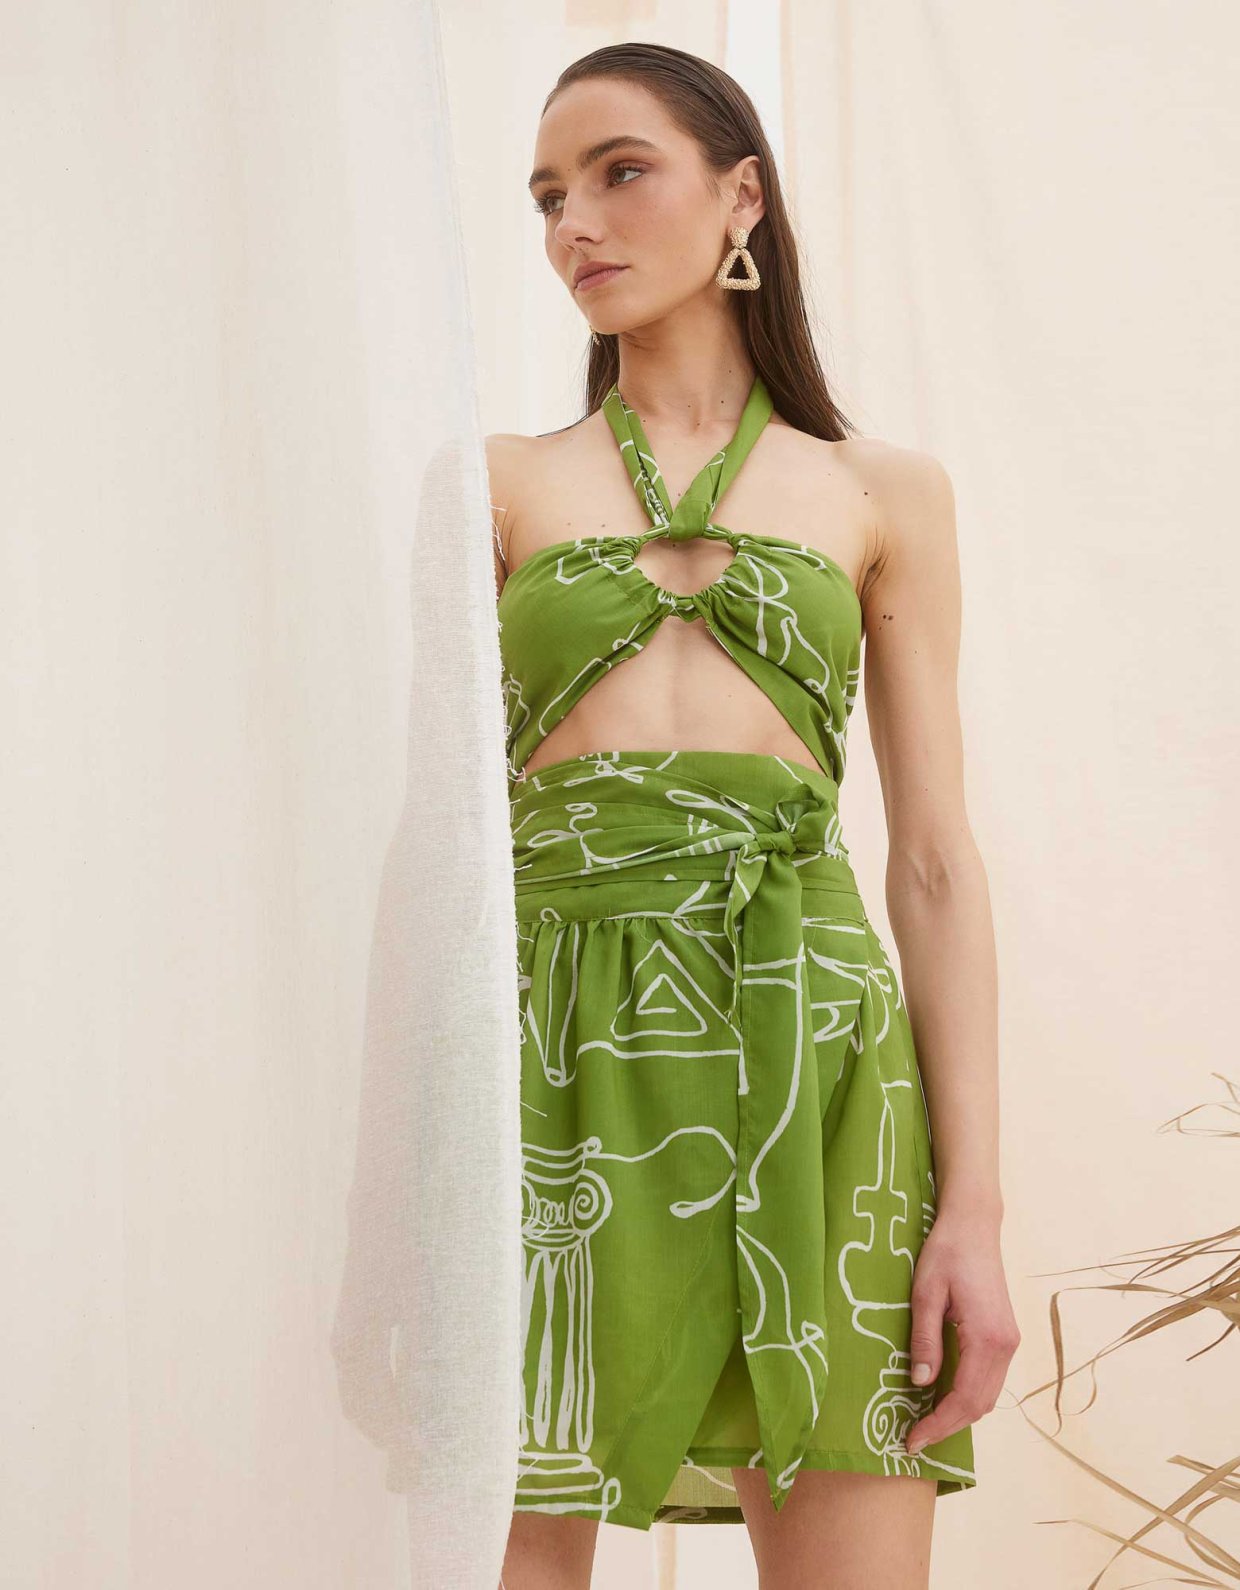 The Knl's Nesoi wrap mini skirt lime green line